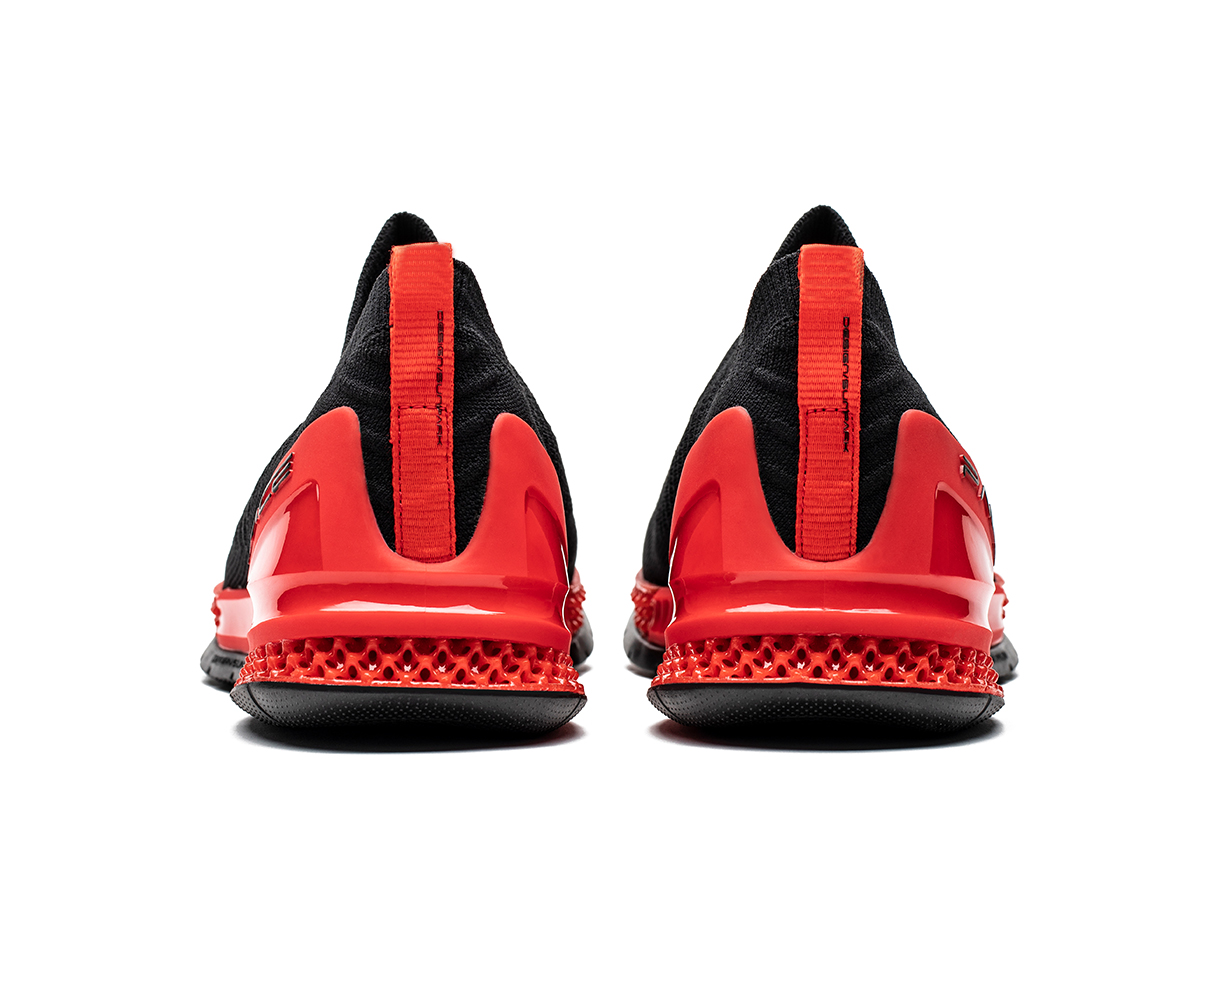 3D 打印实现量产 | Revo 塑成科技推出新一代 3D 打印运动鞋